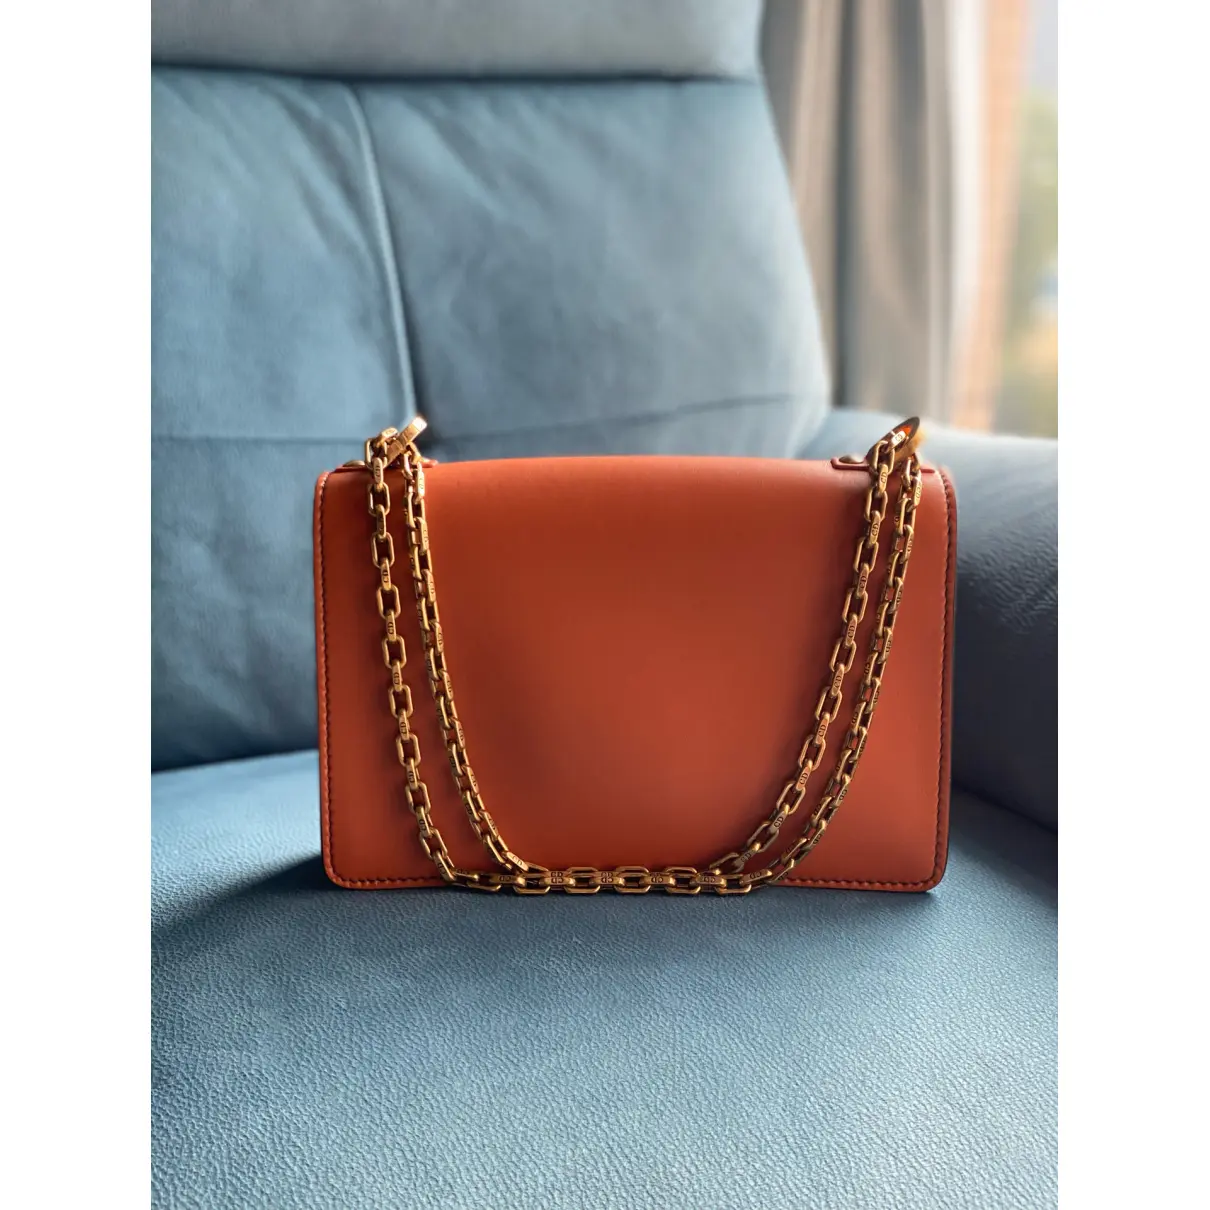 Buy Dior J'Adior leather handbag online